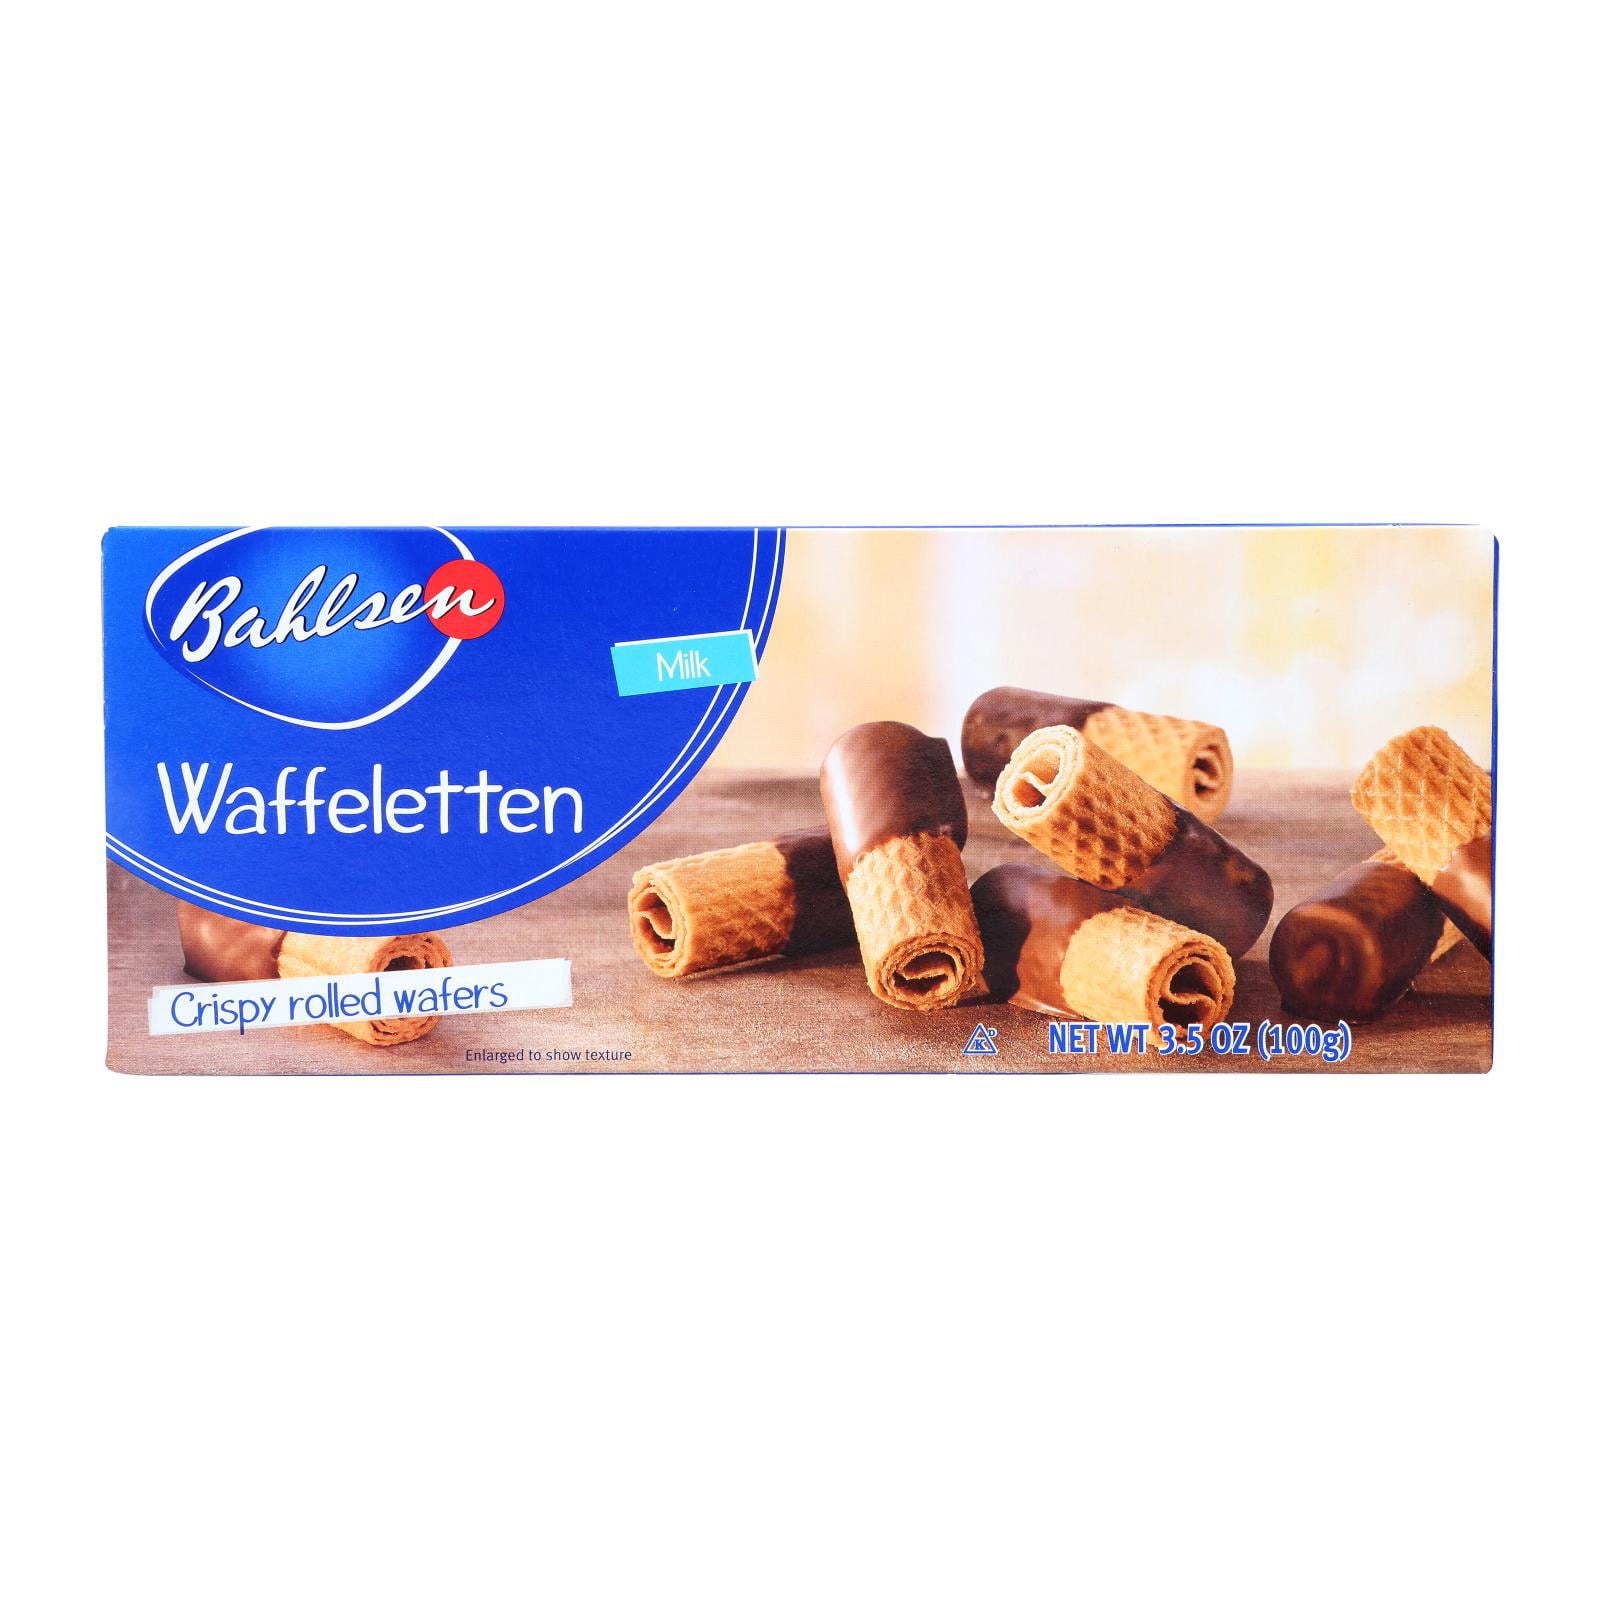 Bahlsen Waffeletten Delicate Wafer Rolls dipped in European Chocolate 3.5 oz Box